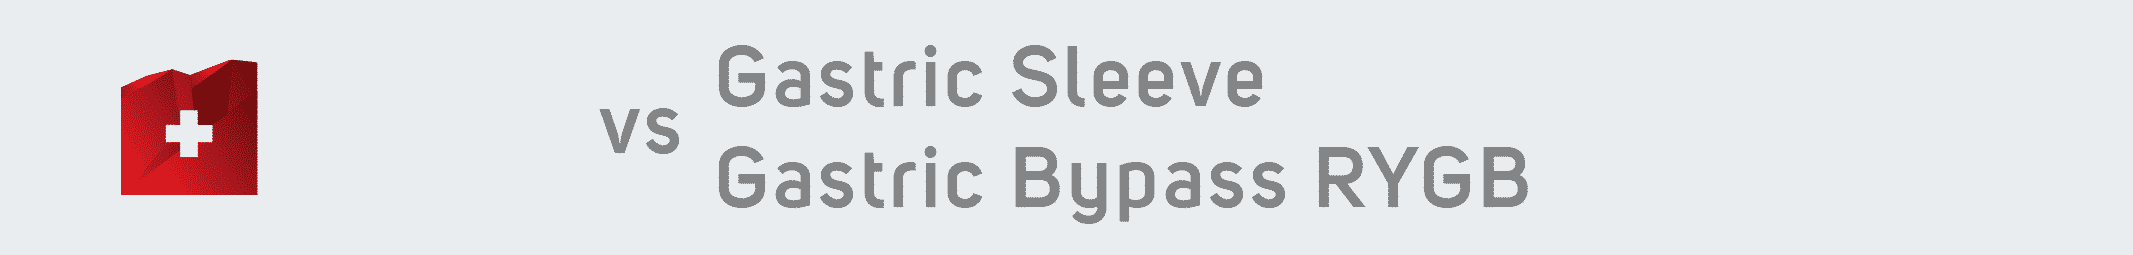 banner gastric sleeve vs gastric bypass